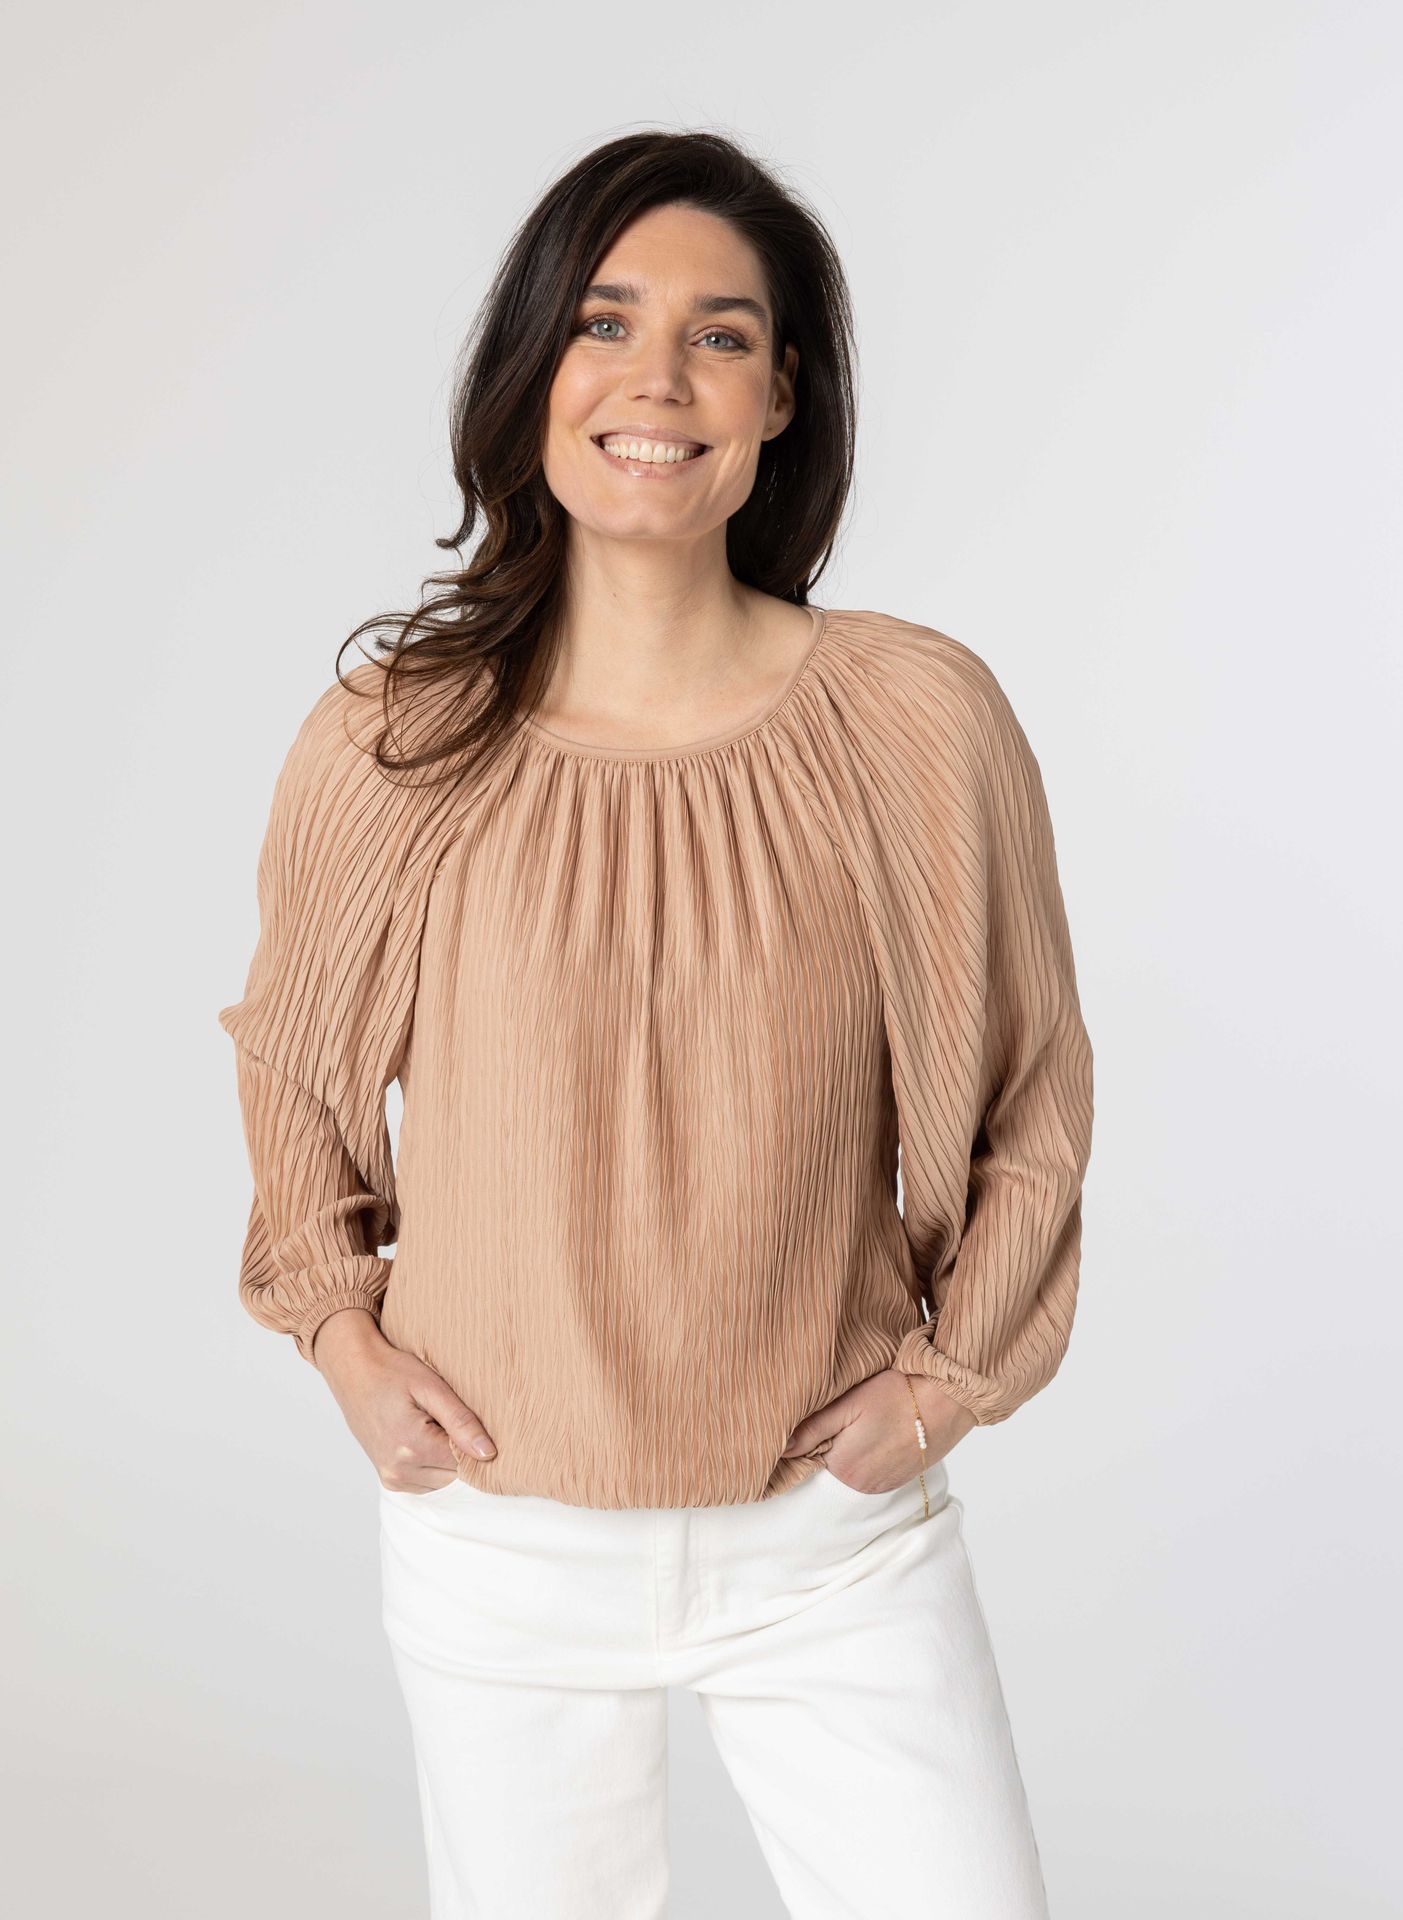 Norah Lichtbruine blouse light brown 214259-201